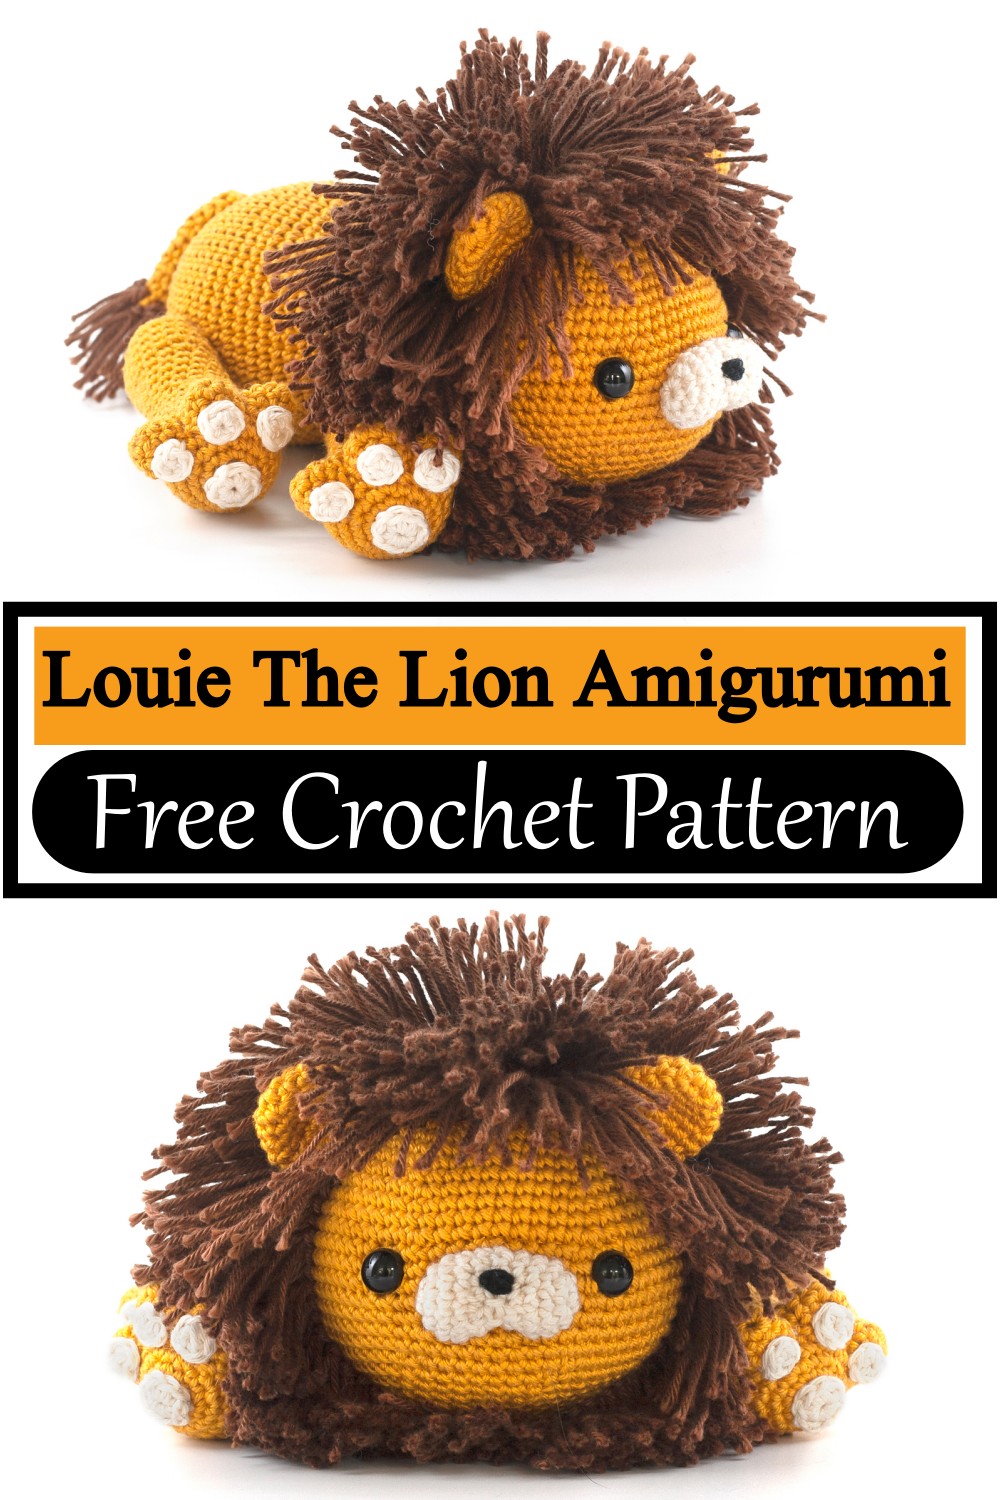 Louie The Lion Amigurumi